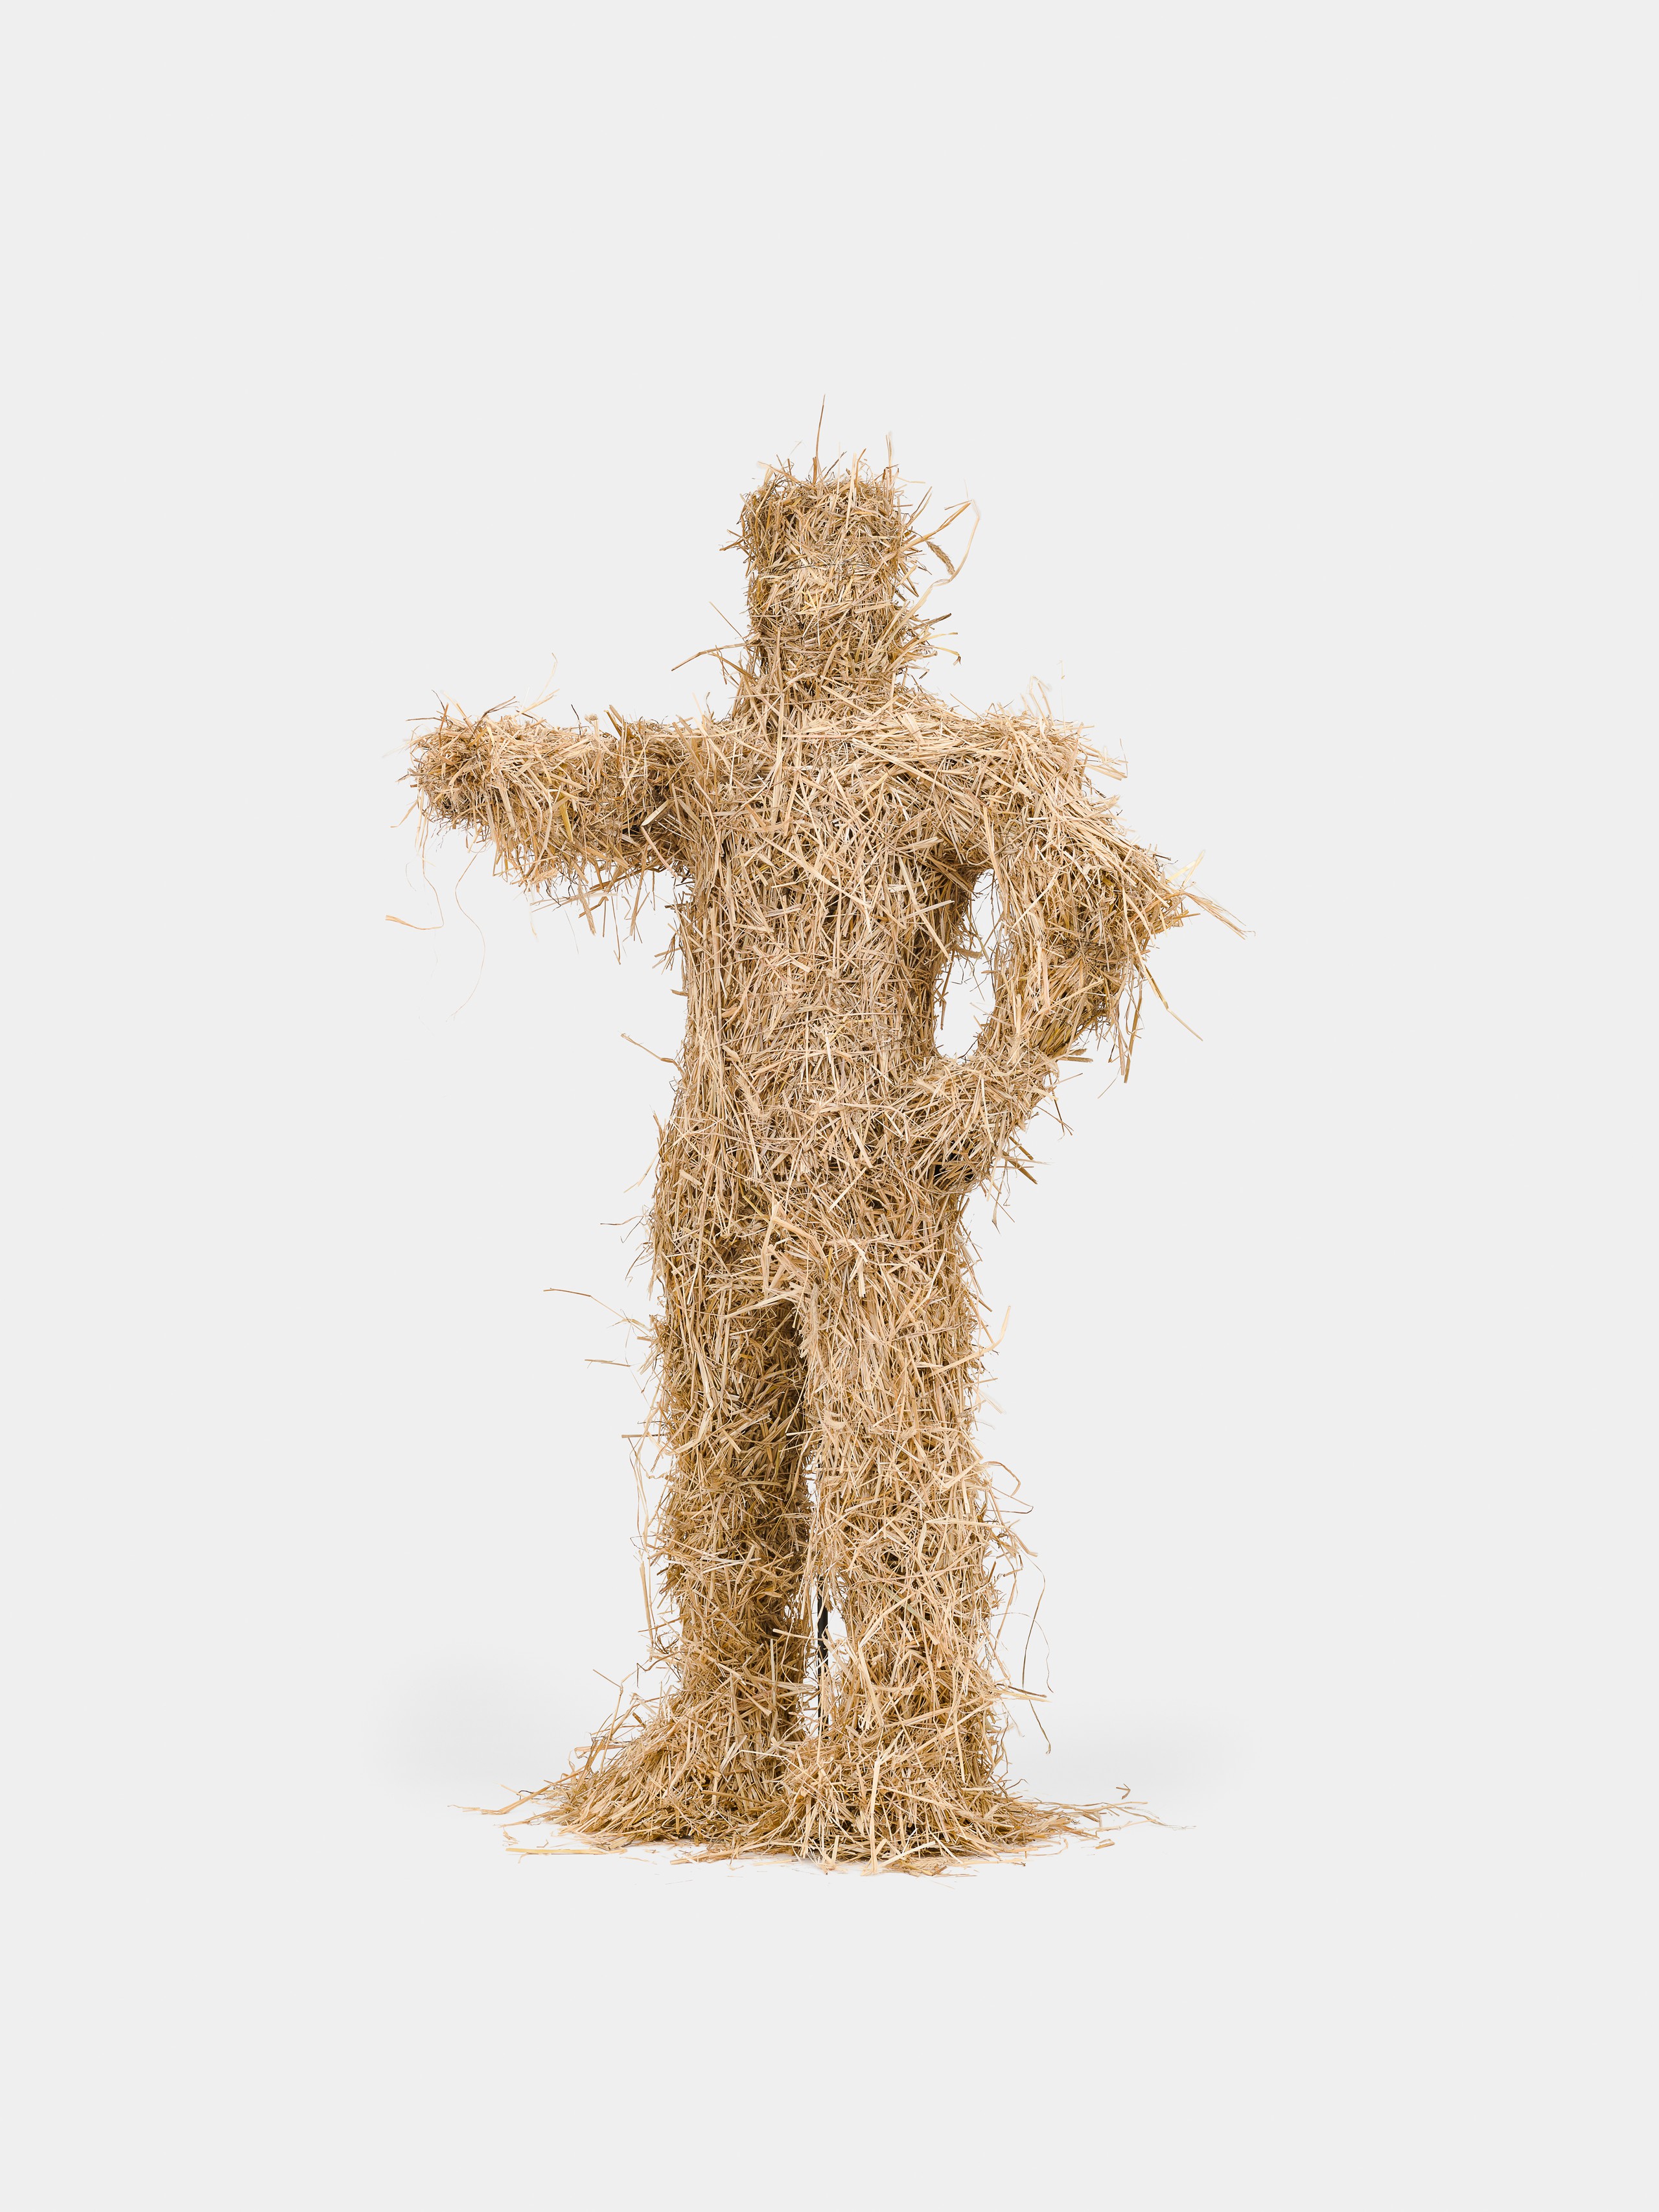 Kaspar Müller, Untitled, 2022, Straw, fiberglass, wood, steel 200 × 110 × 100 cm, 78 1/2 × 43 1/2 × 39 1/2 in